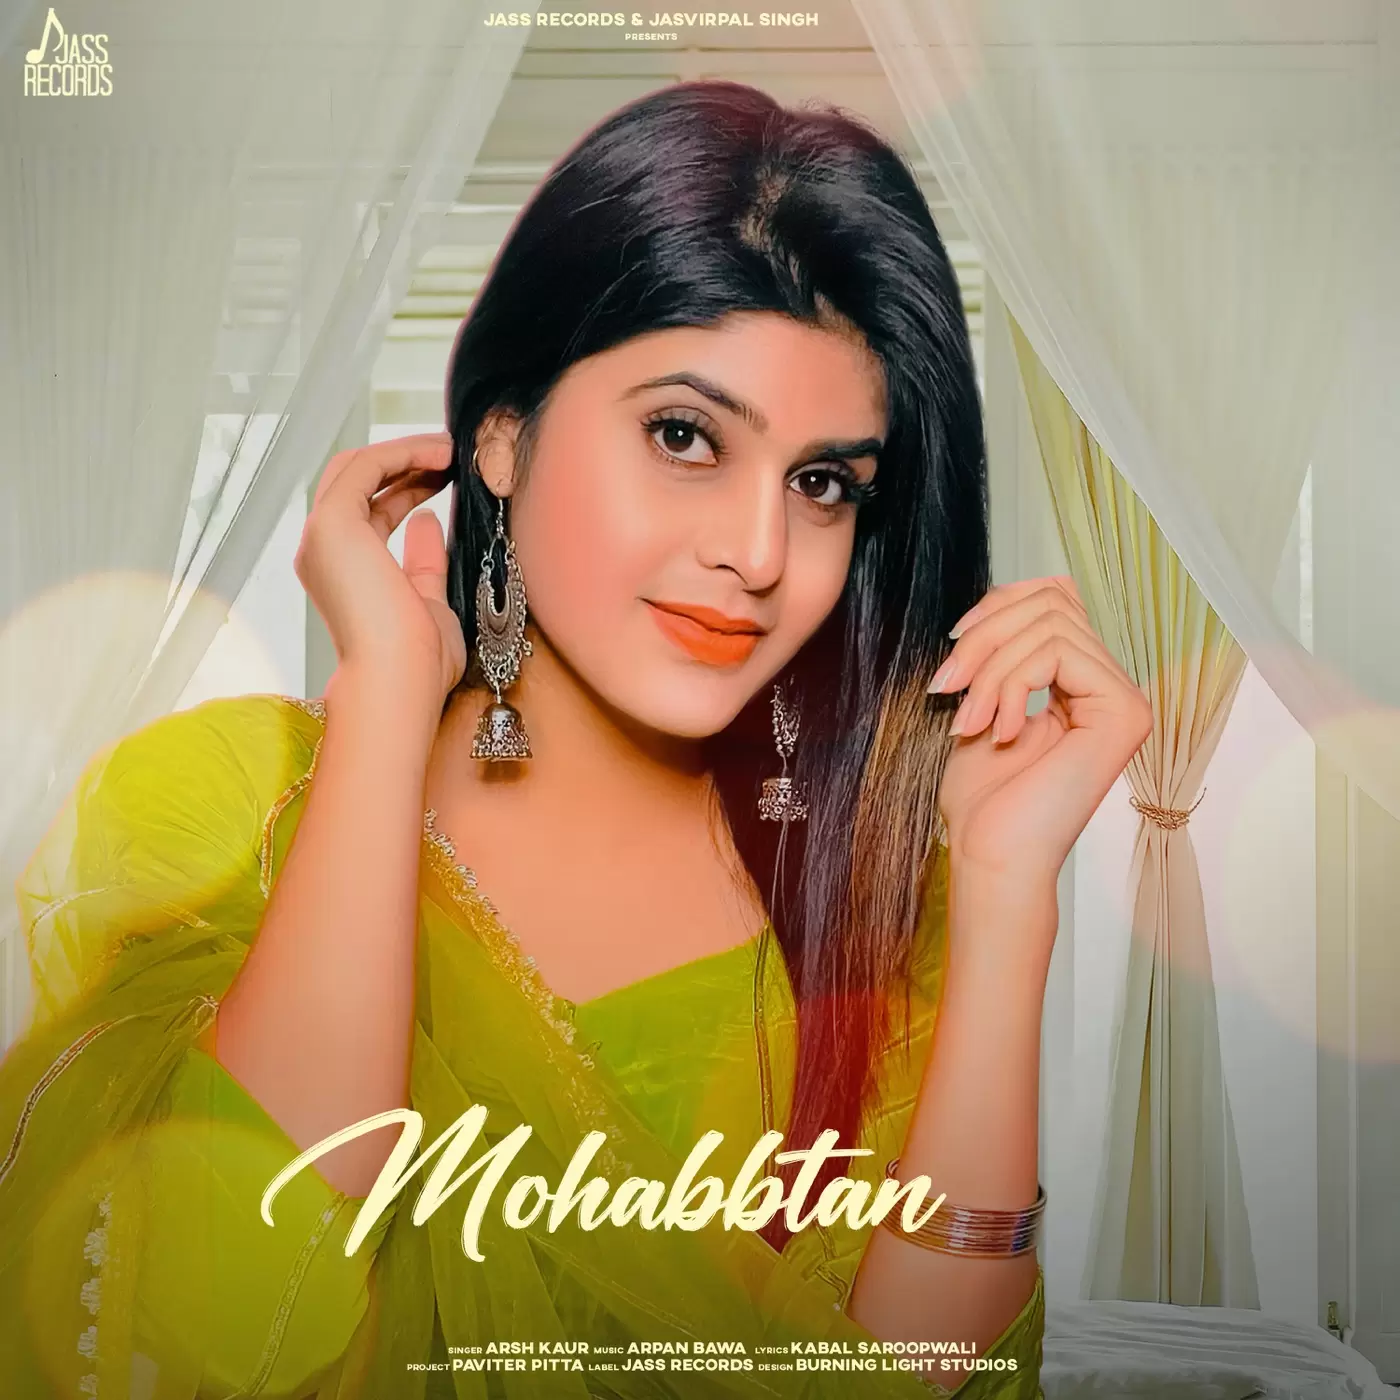 Mohabbtan Arsh Kaur Mp3 Download Song - Mr-Punjab